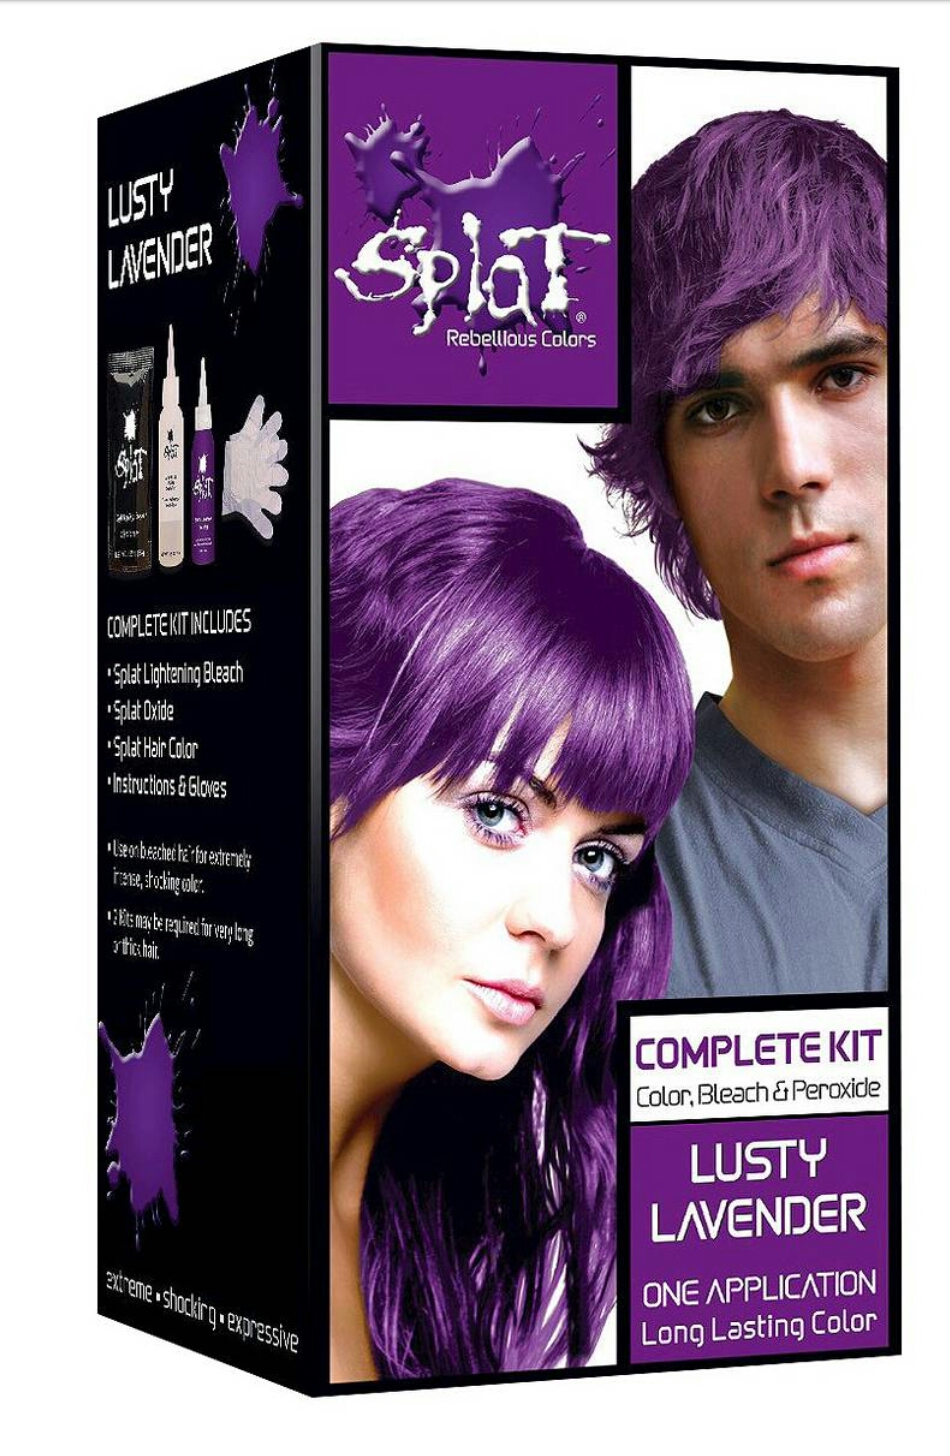 Bleach Purple Hair Dye Review Splat On Dark Hair Leather